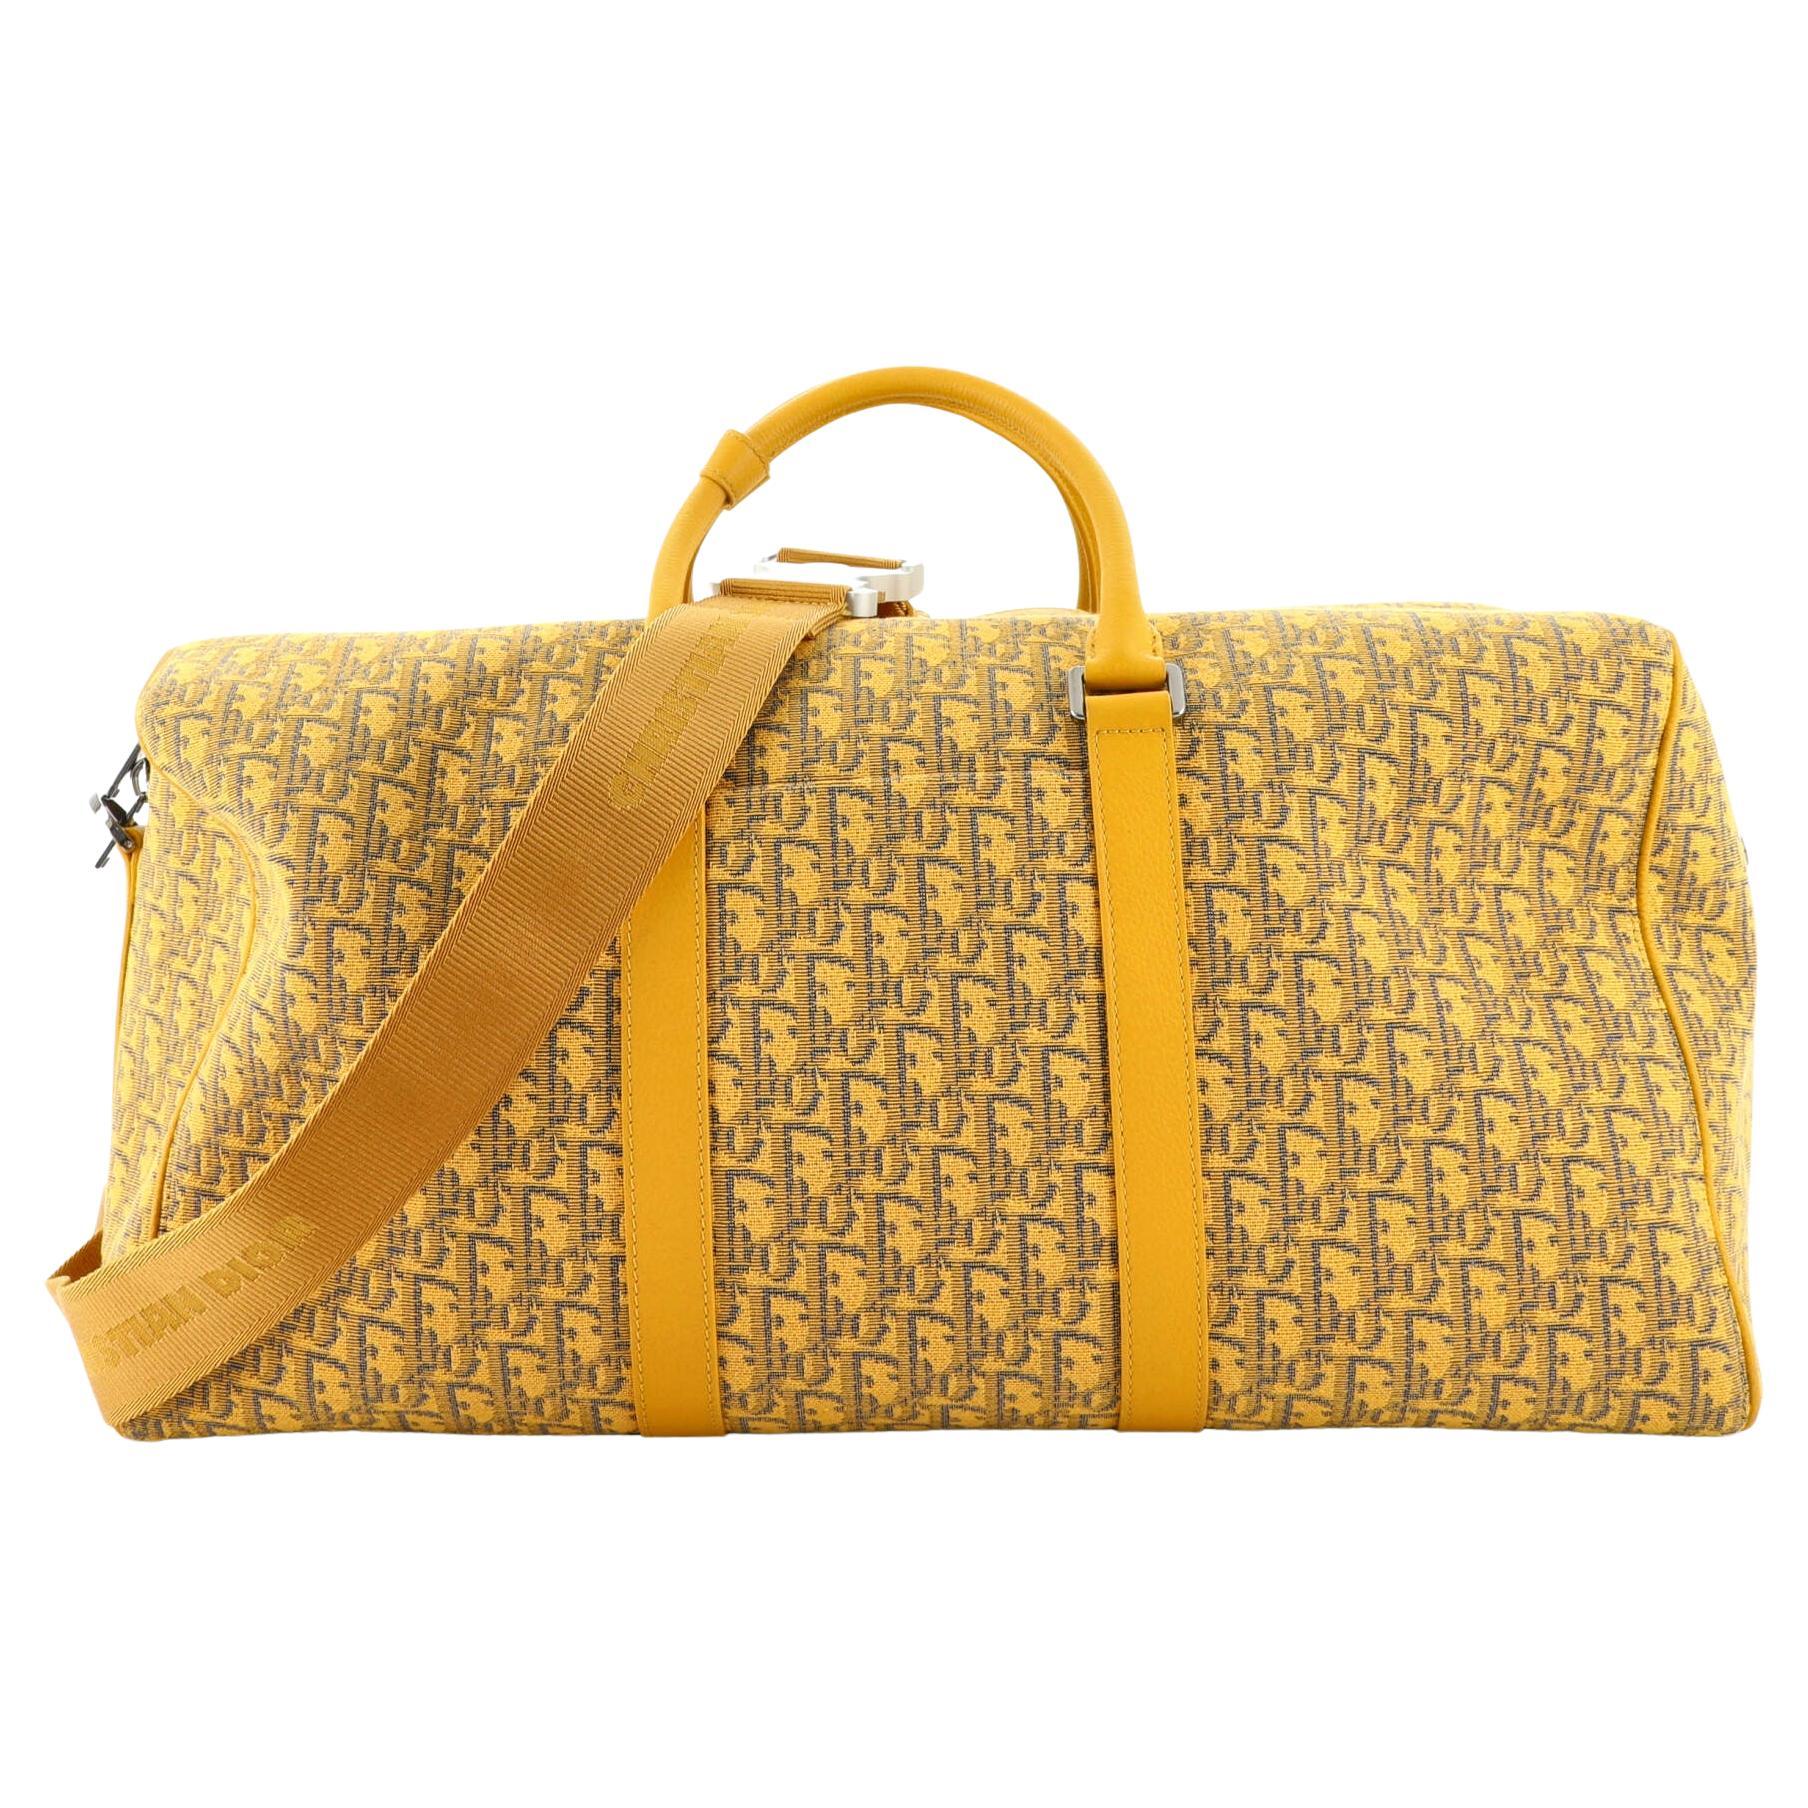 Chrsitian Dior Lingot travel duffel luggage bag